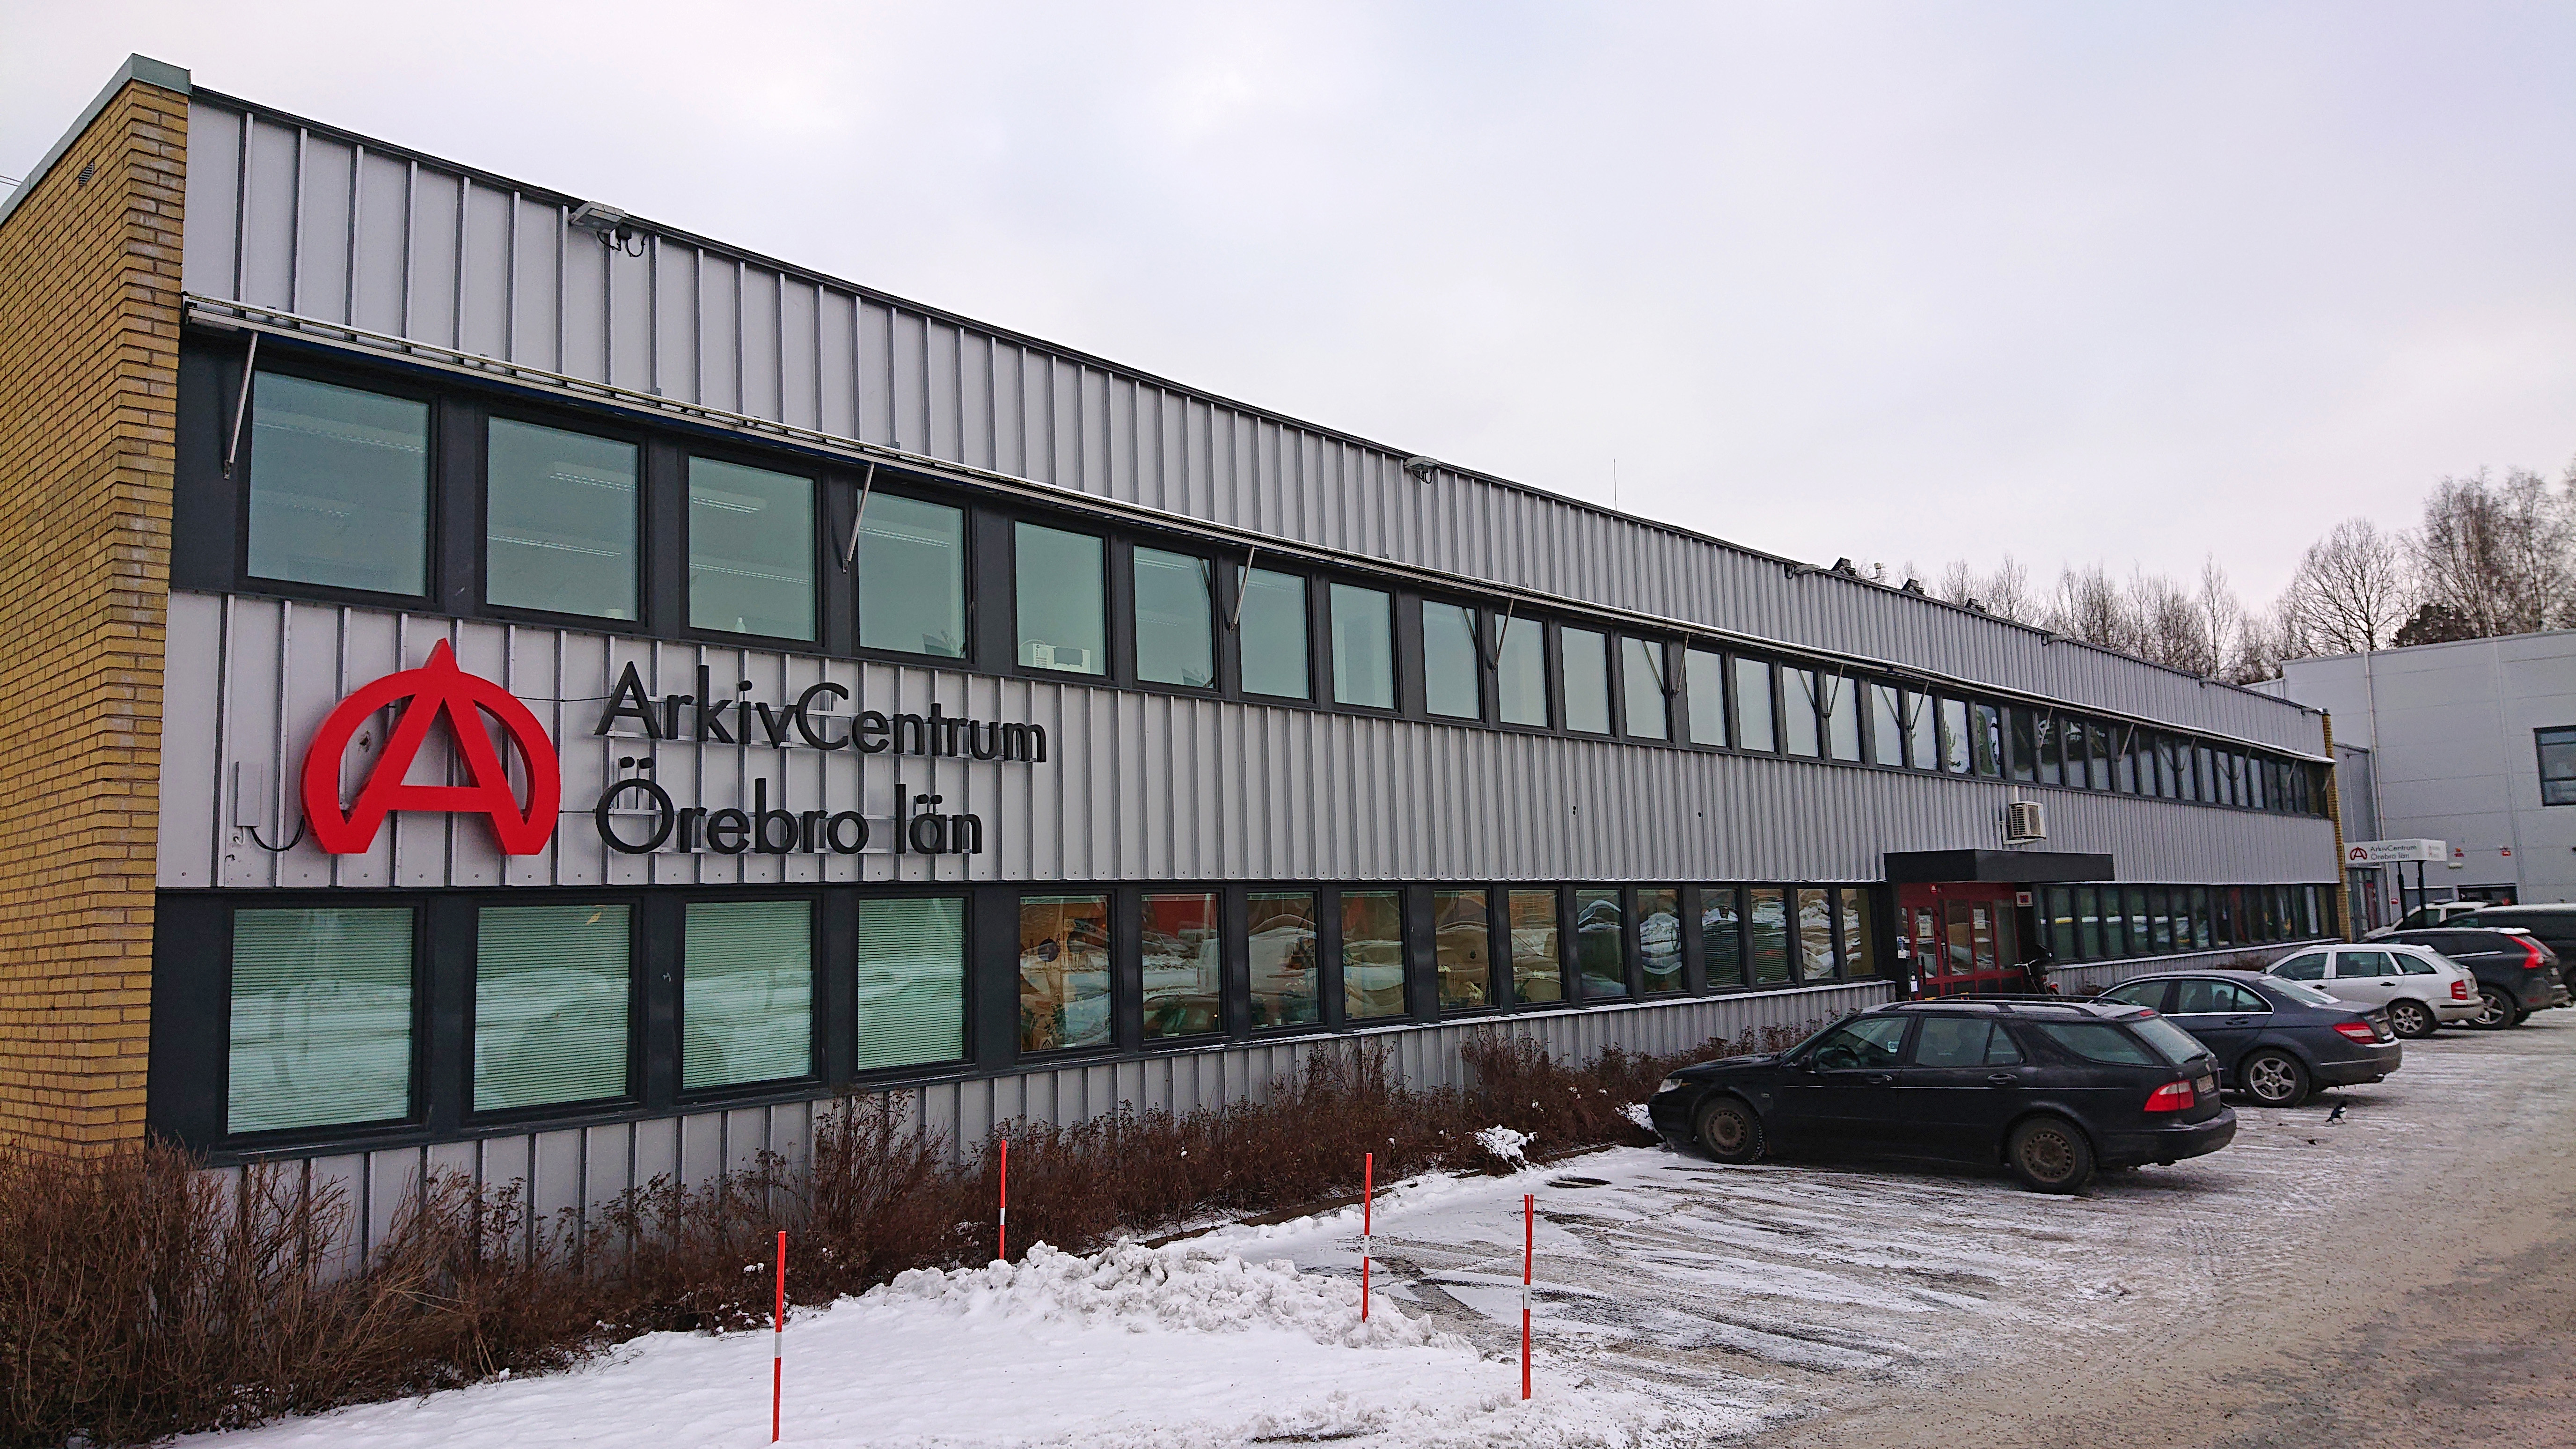 ArkivCentrums lokaler på Nastagatan 11 i Örebro